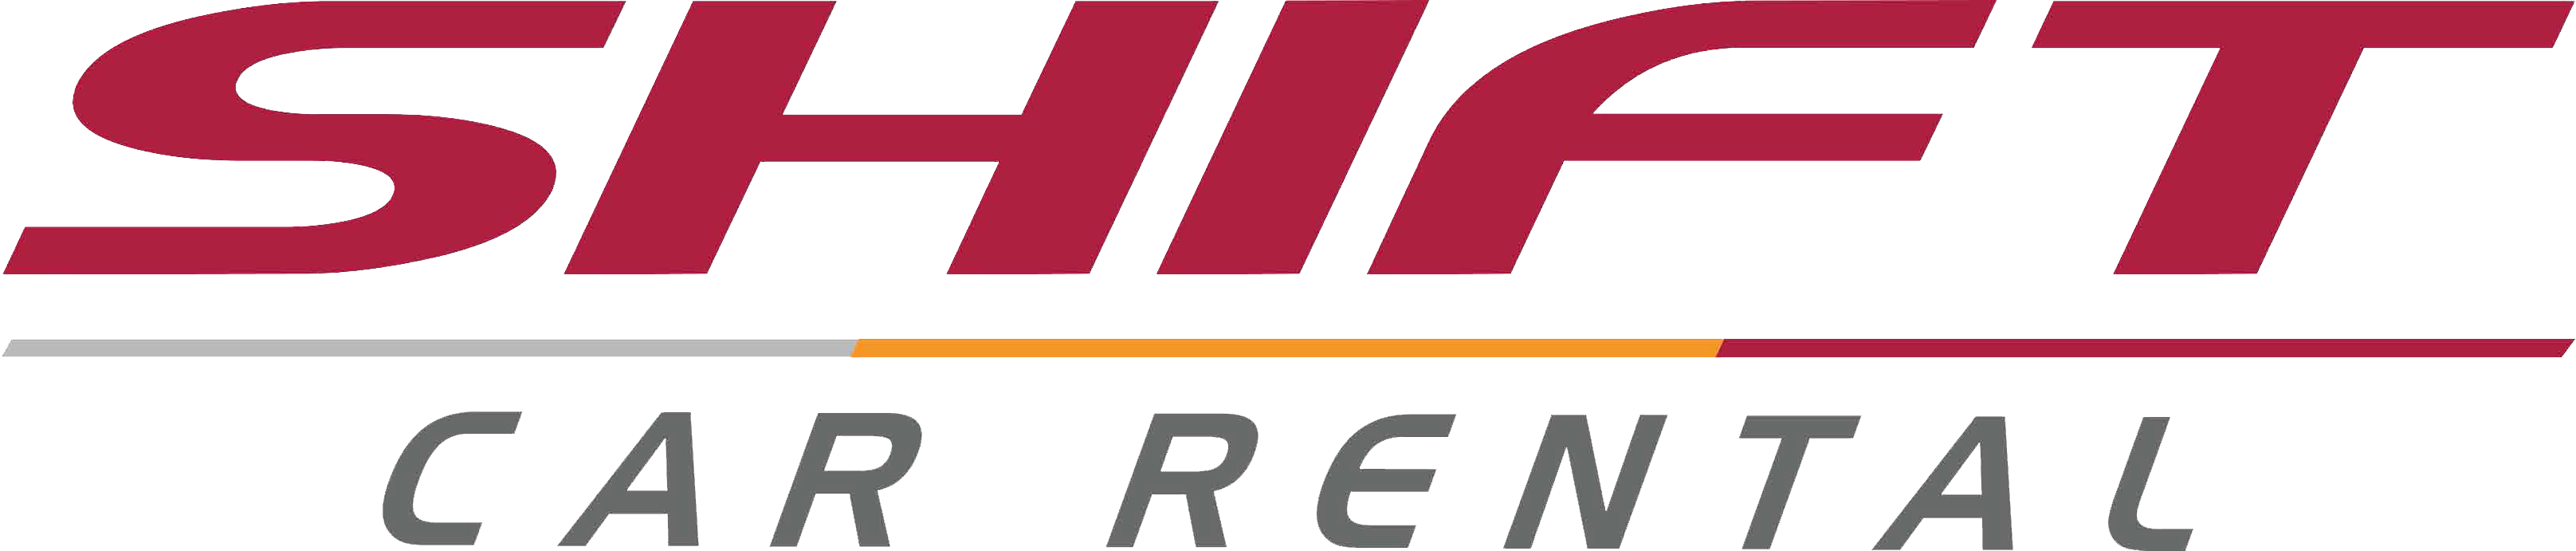 Company Logo For SHIFT CAR RENTAL'